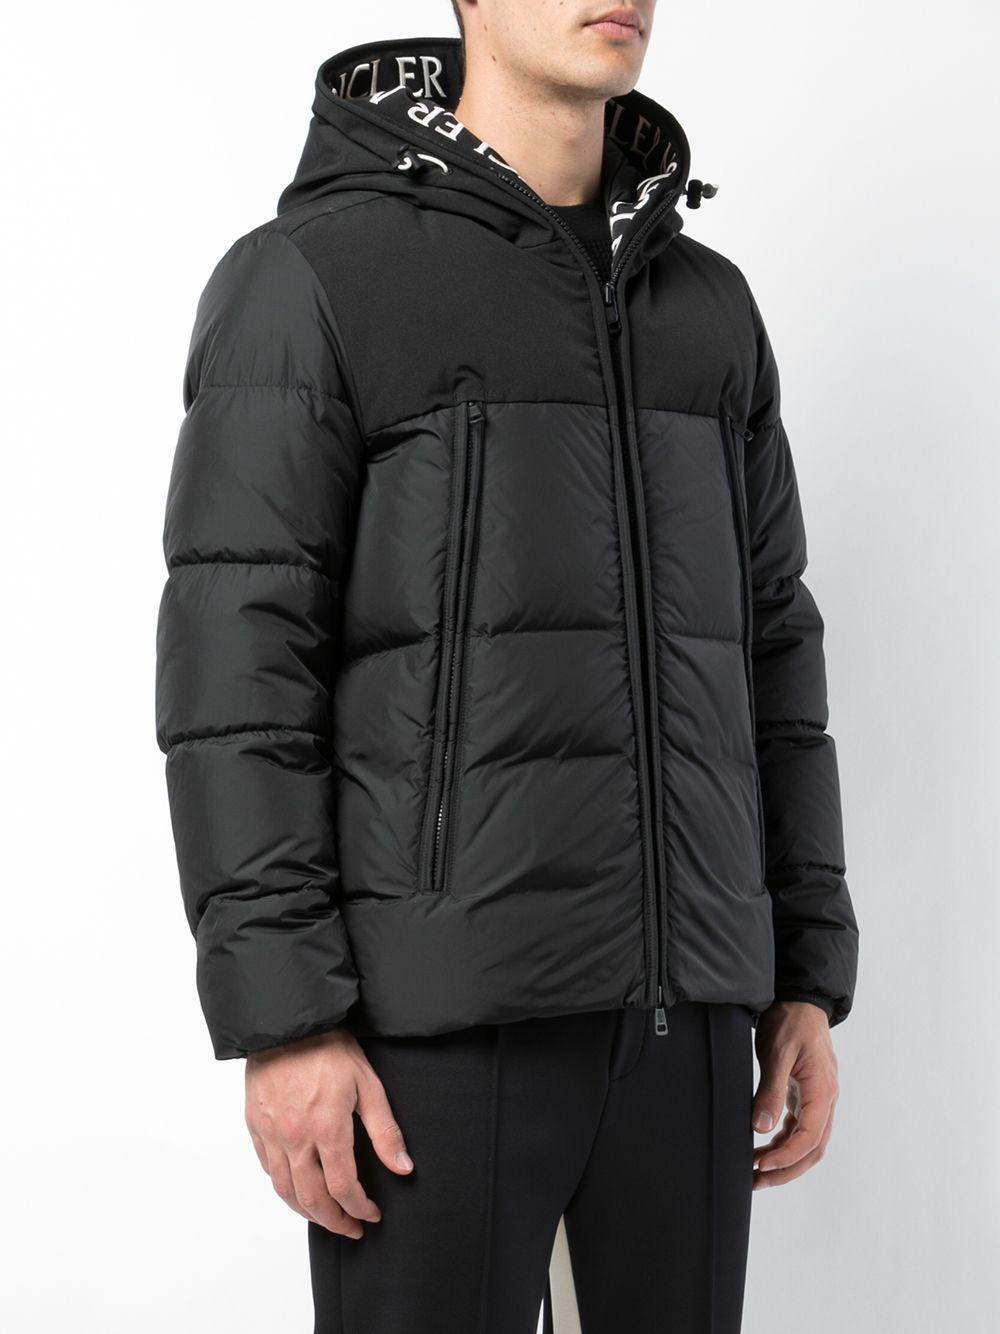 Moncler Cotton Logo Hooded Down Jacket in Black for Men - Lyst